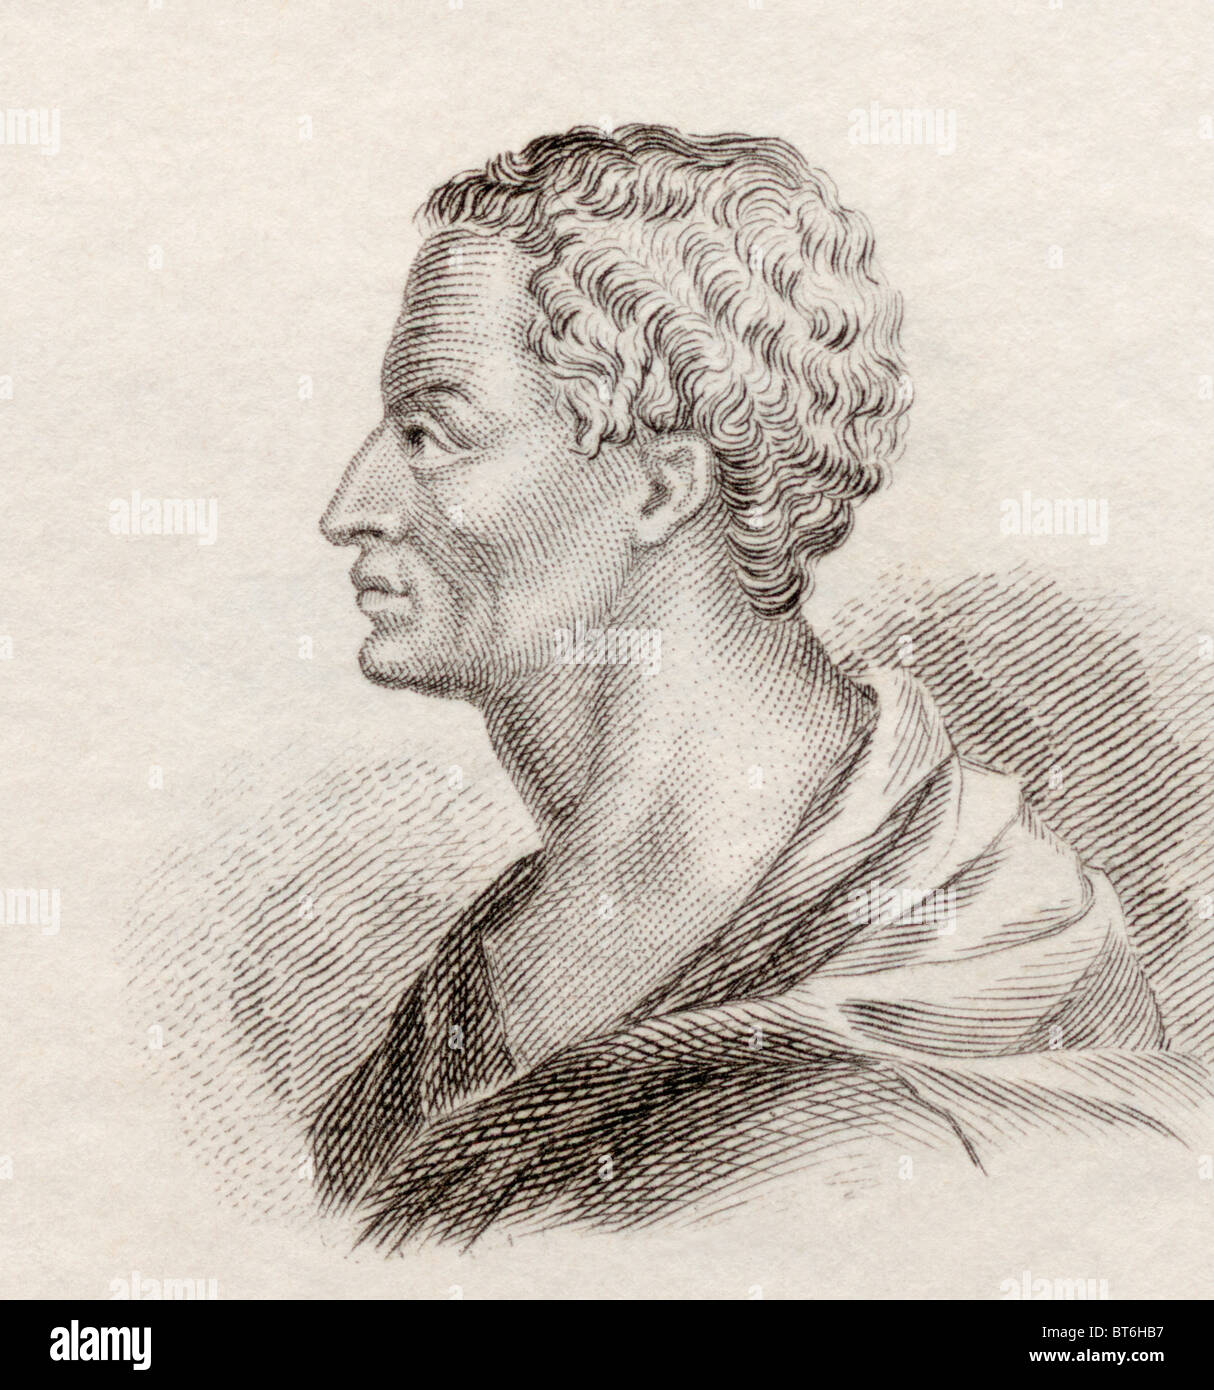 Marcus Tullius Cicero, 106 BC to 43 BC. Roman philosopher, statesman, lawyer, political theorist, and Roman constitutionalist. Stock Photo